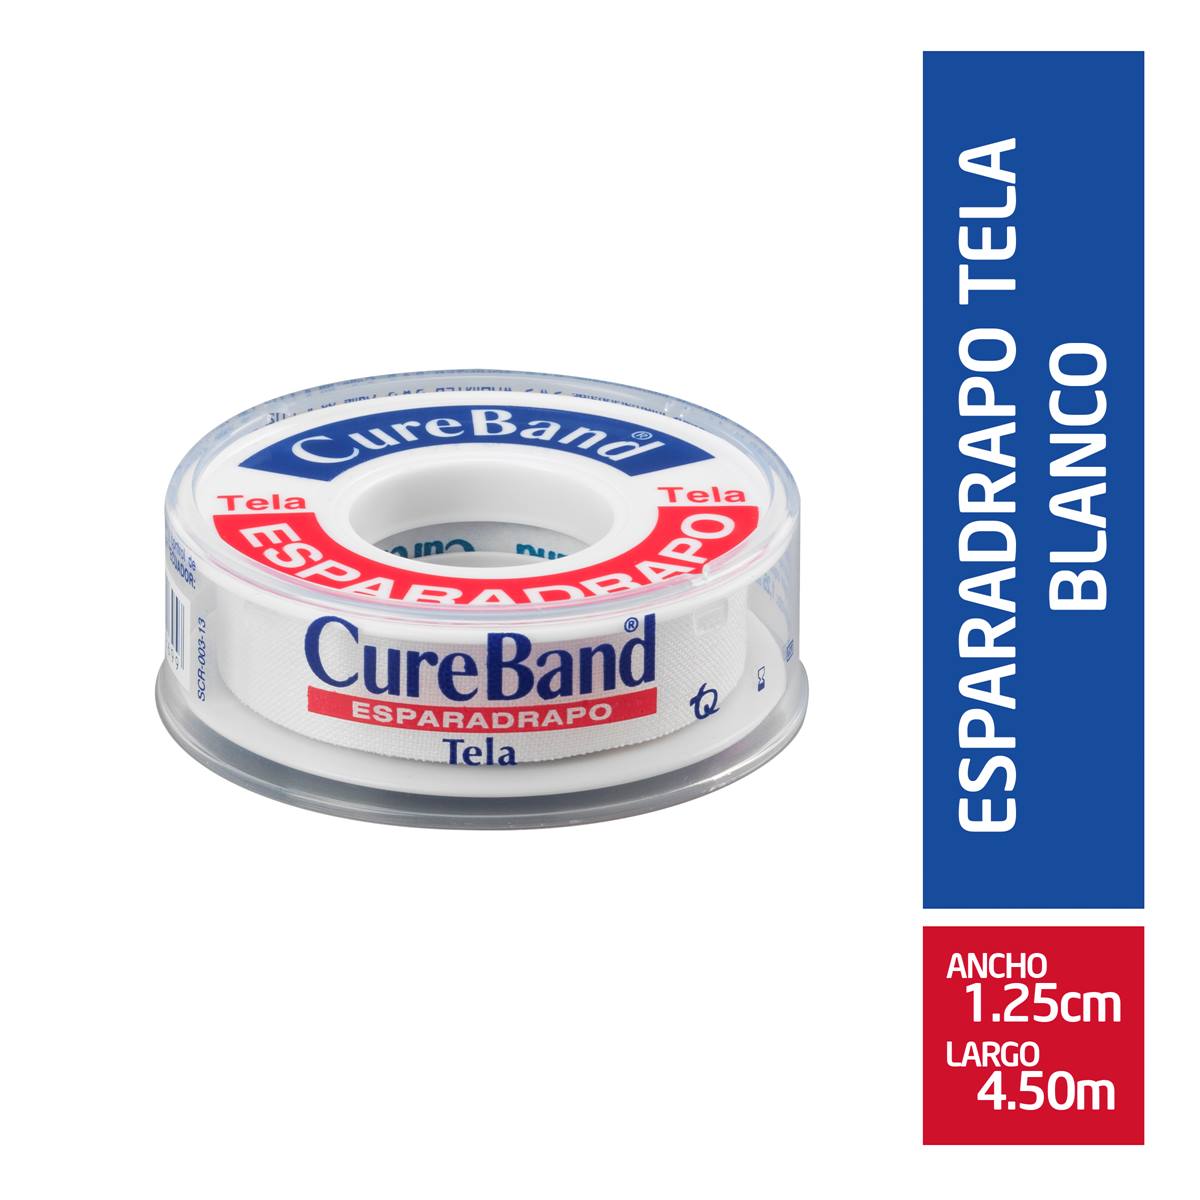 Cureband Esparadrapo De Tela 1/2 x 5 Yardas